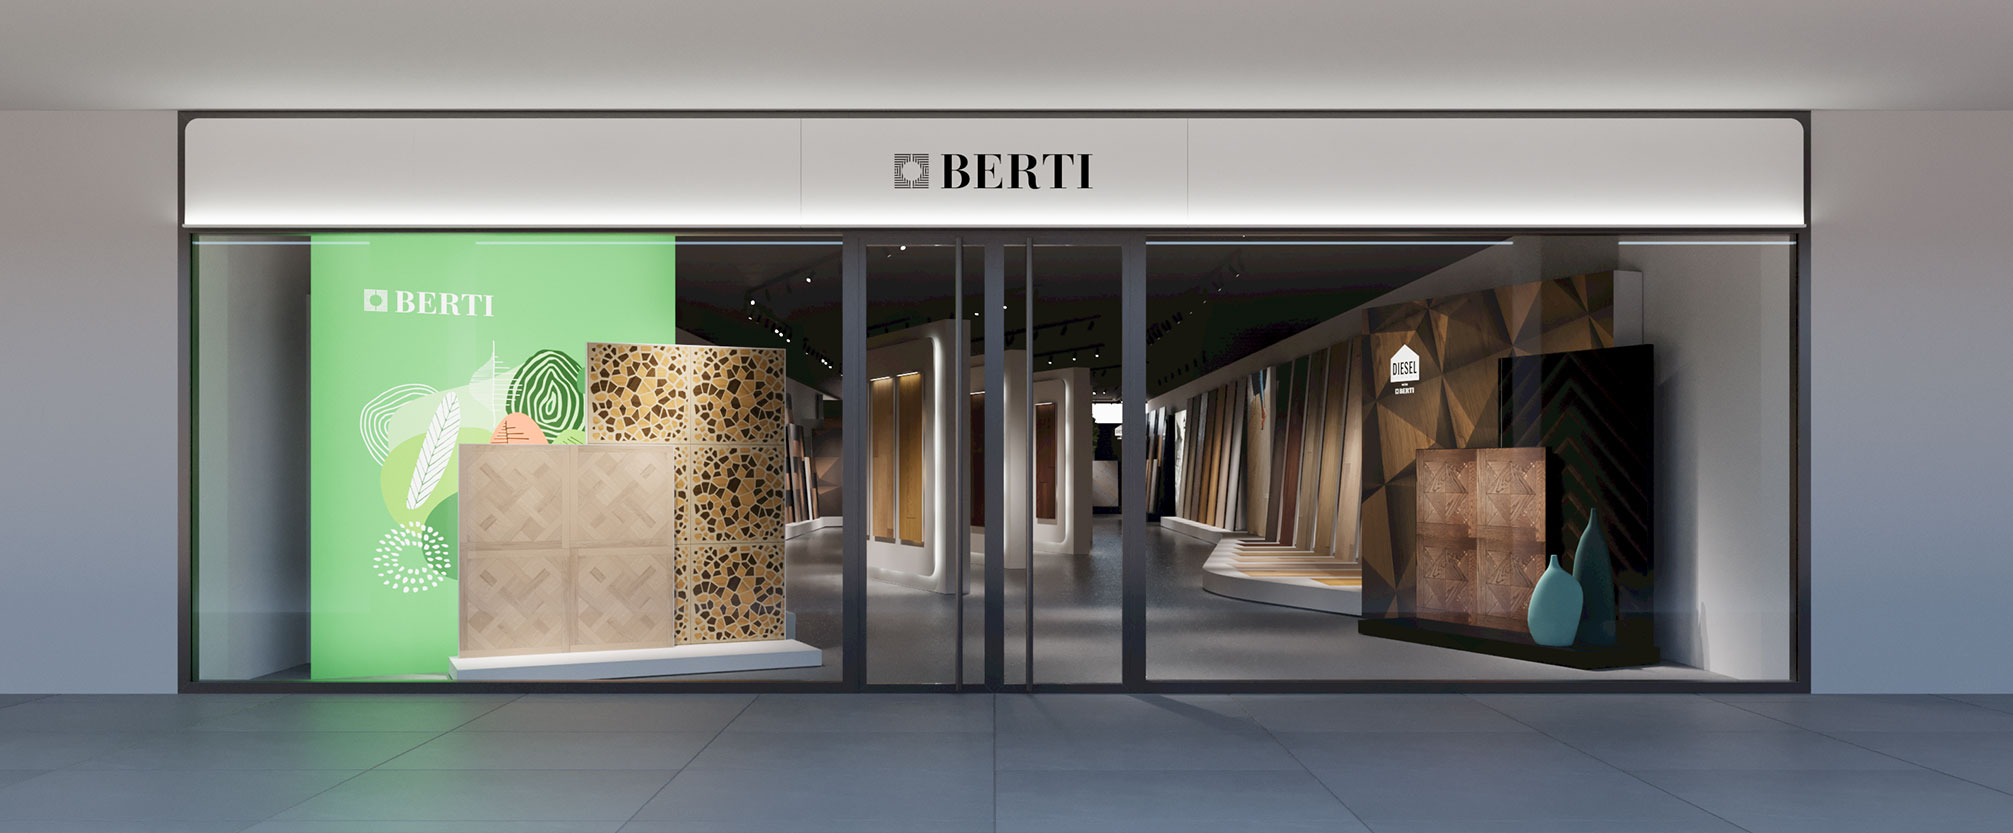 berti-shopping-experience-vetrine-2